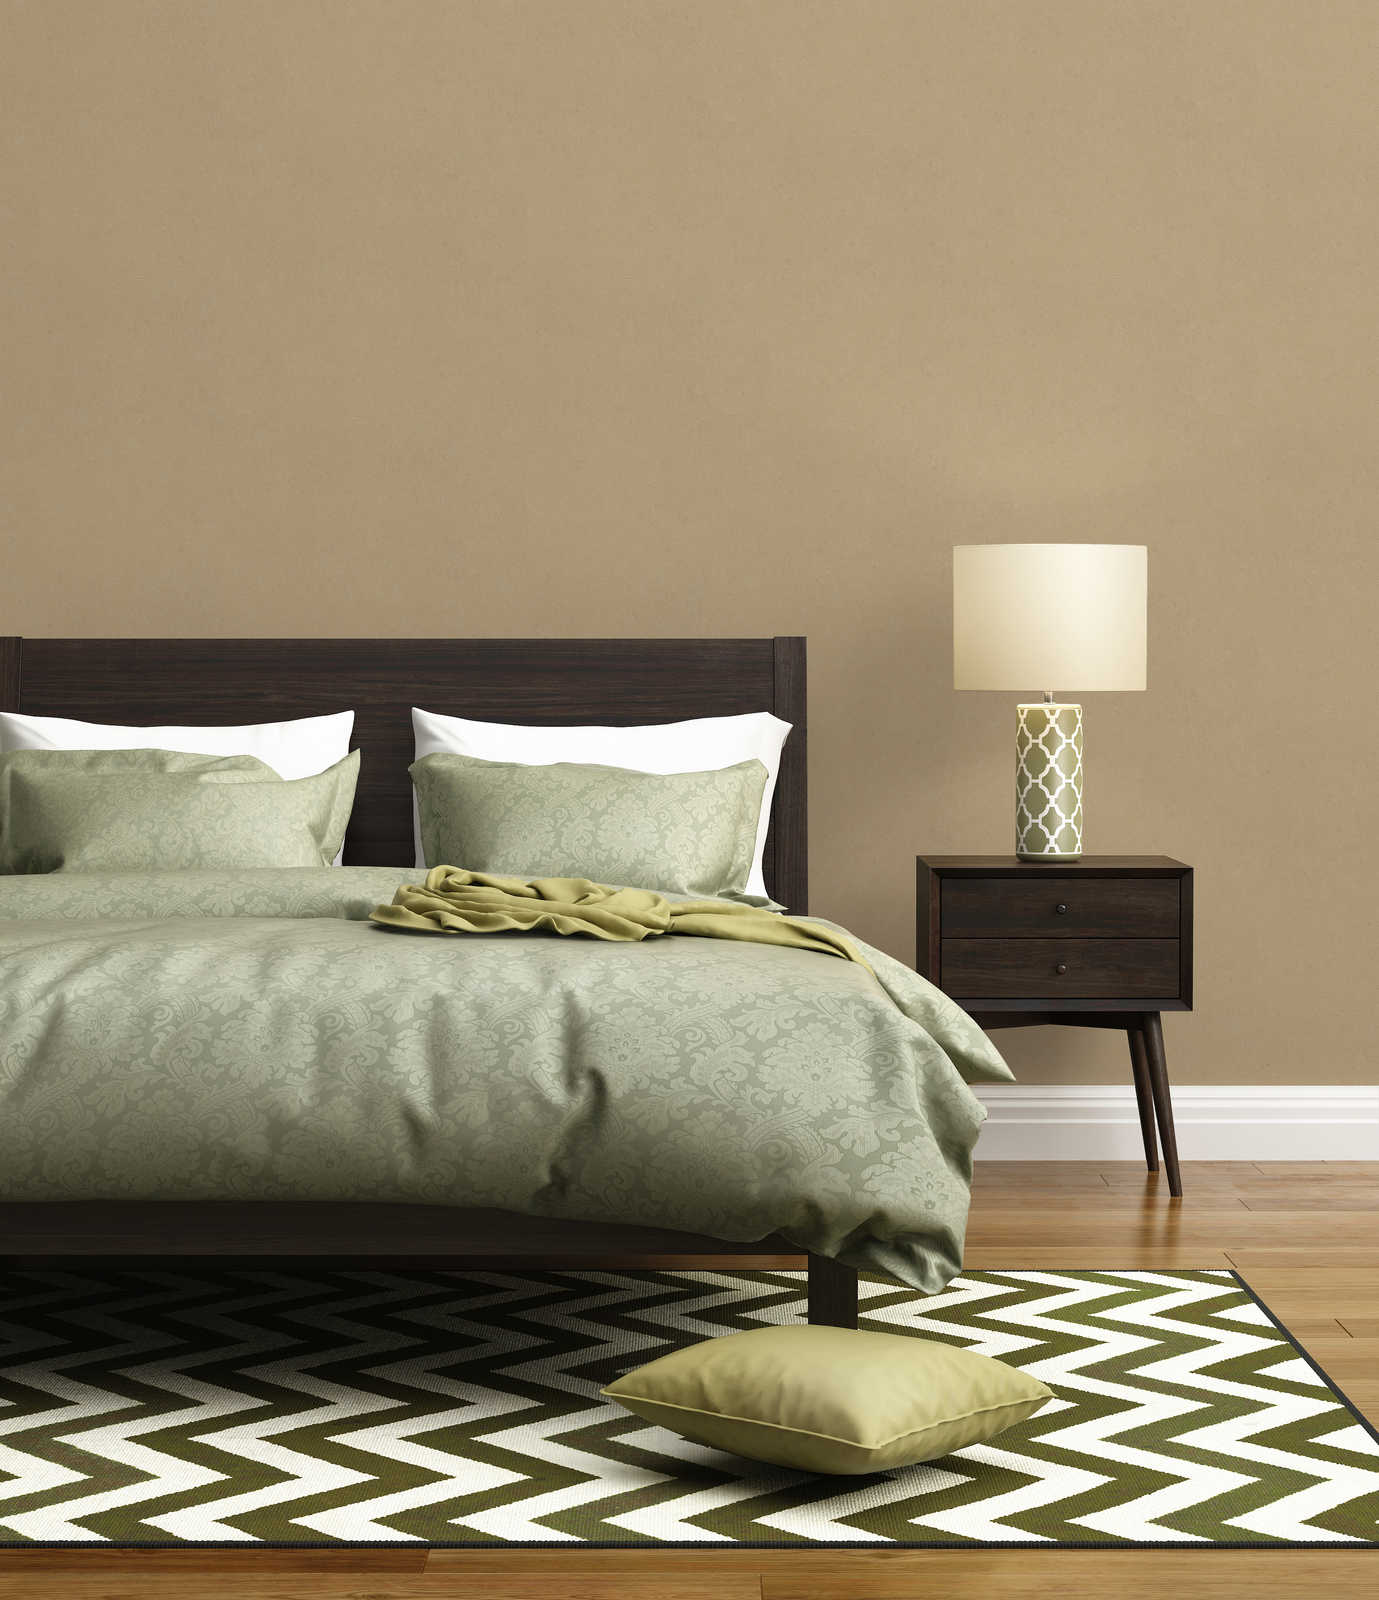             Plain wallpaper beige with texture design
        